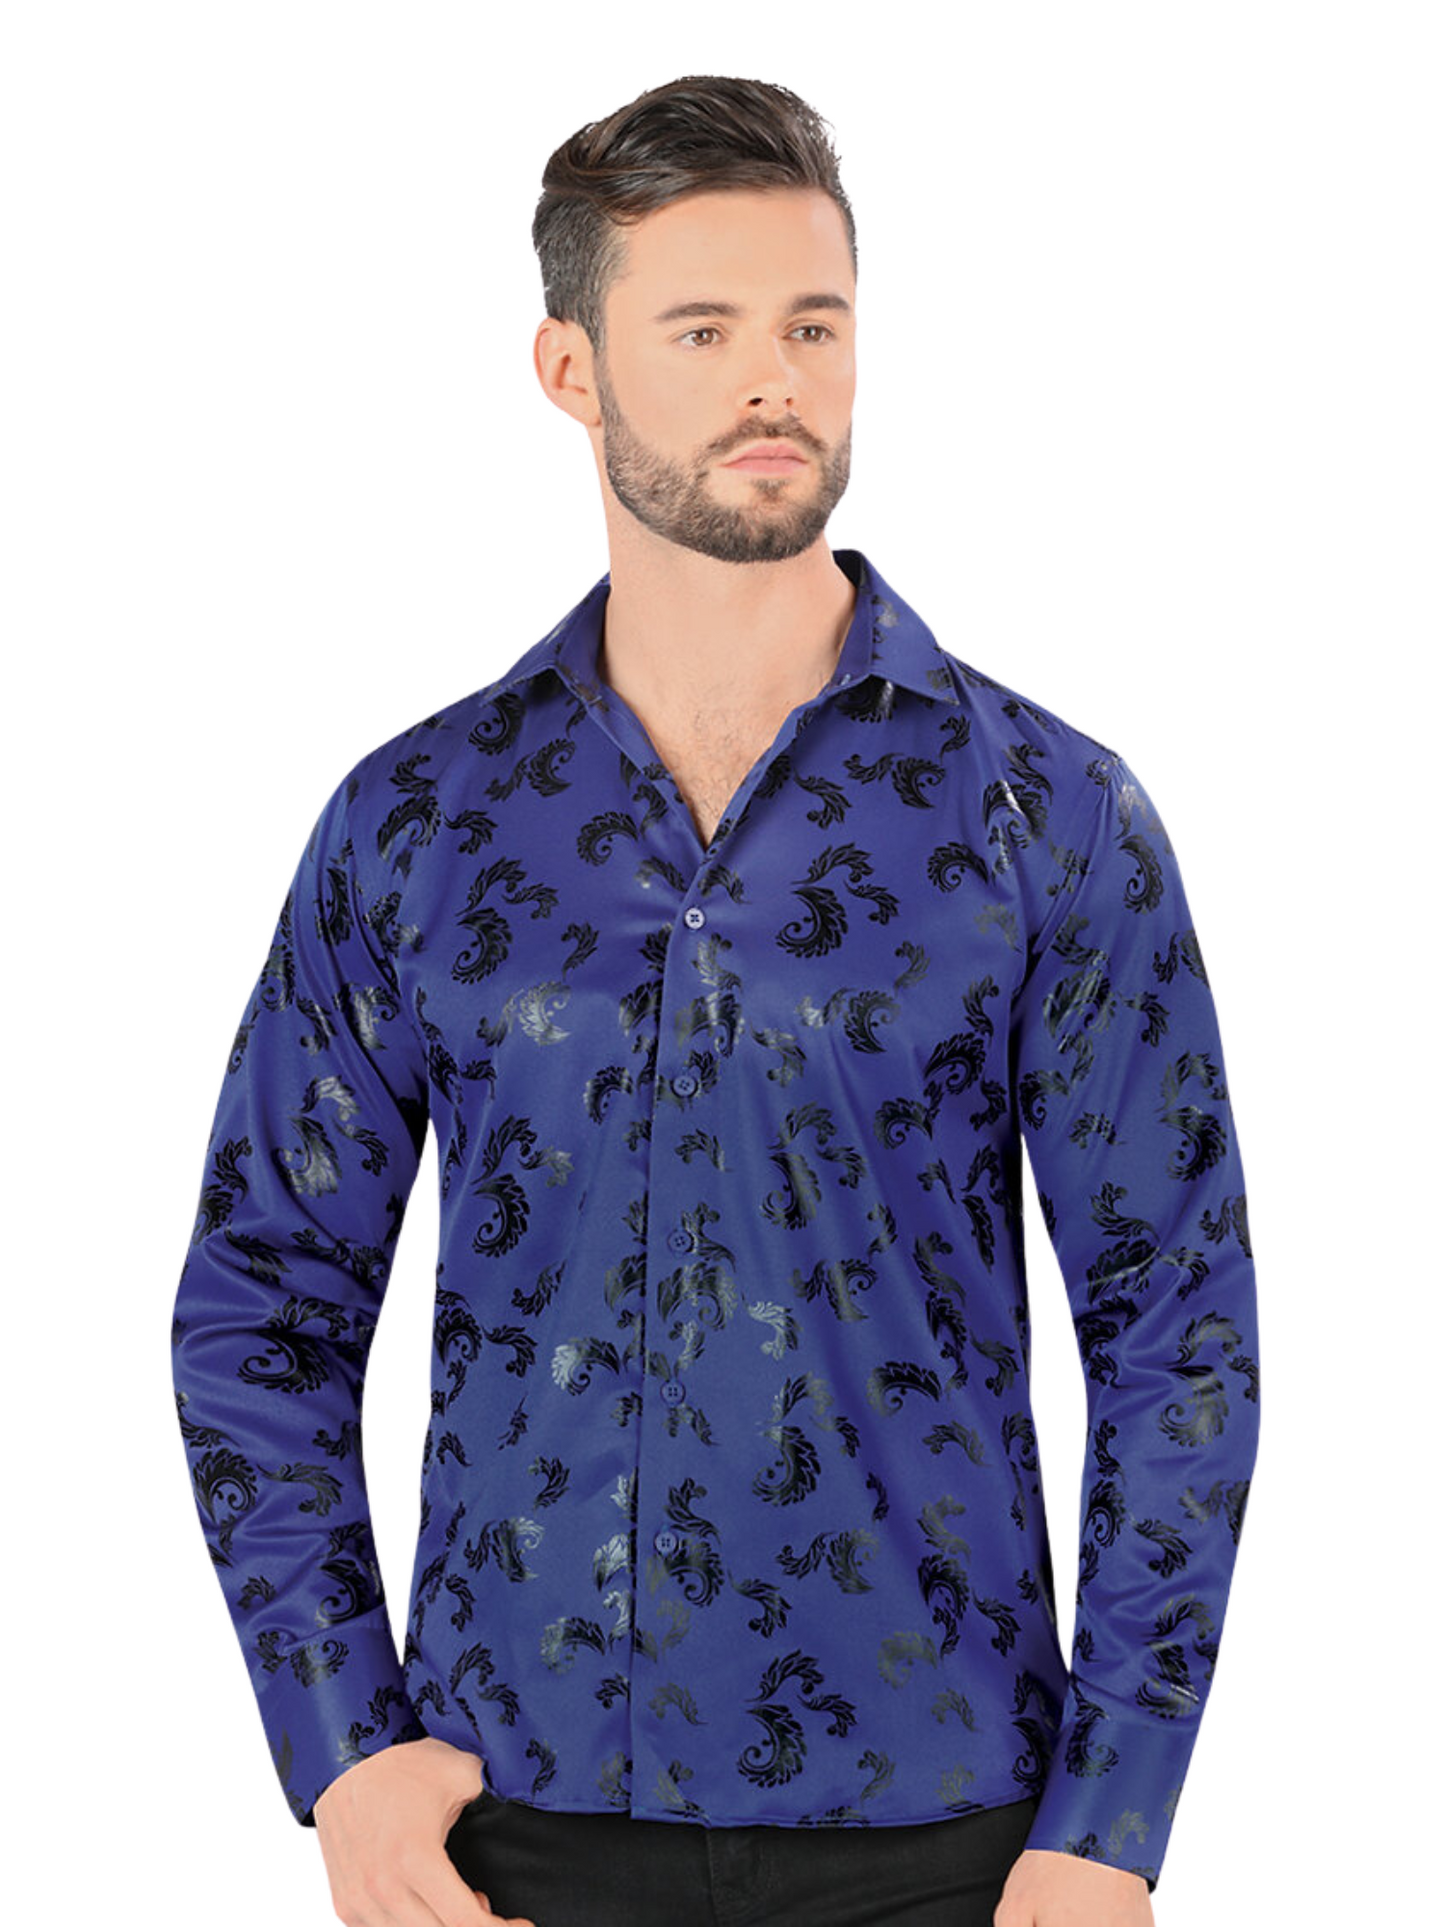 Printed Long Sleeve Casual Shirt for Men 'Montero' - ID: 0806 Casual Shirt Montero Royal